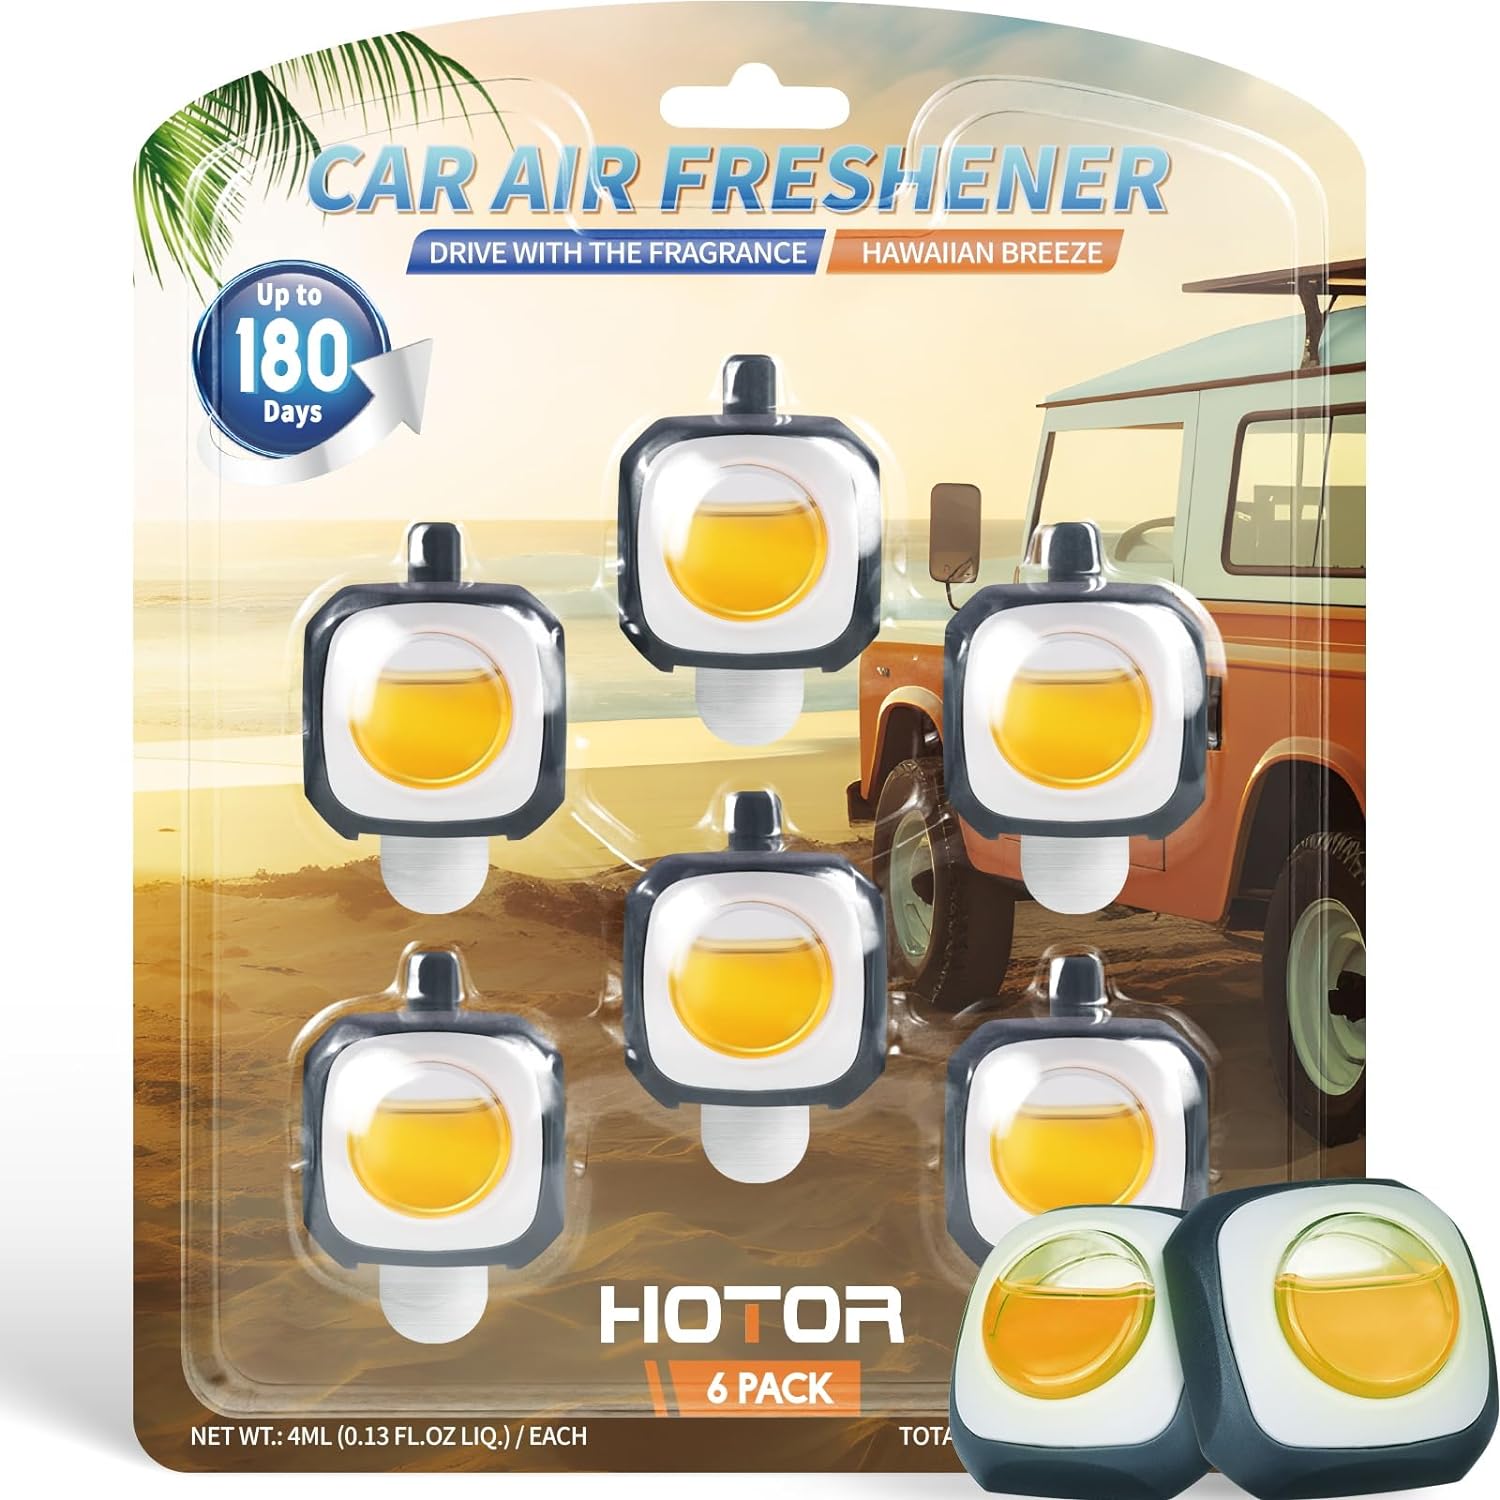 Febreze Car 3-Pack Hawaiian Aloha Car Air Freshener in the Air Fresheners  department at